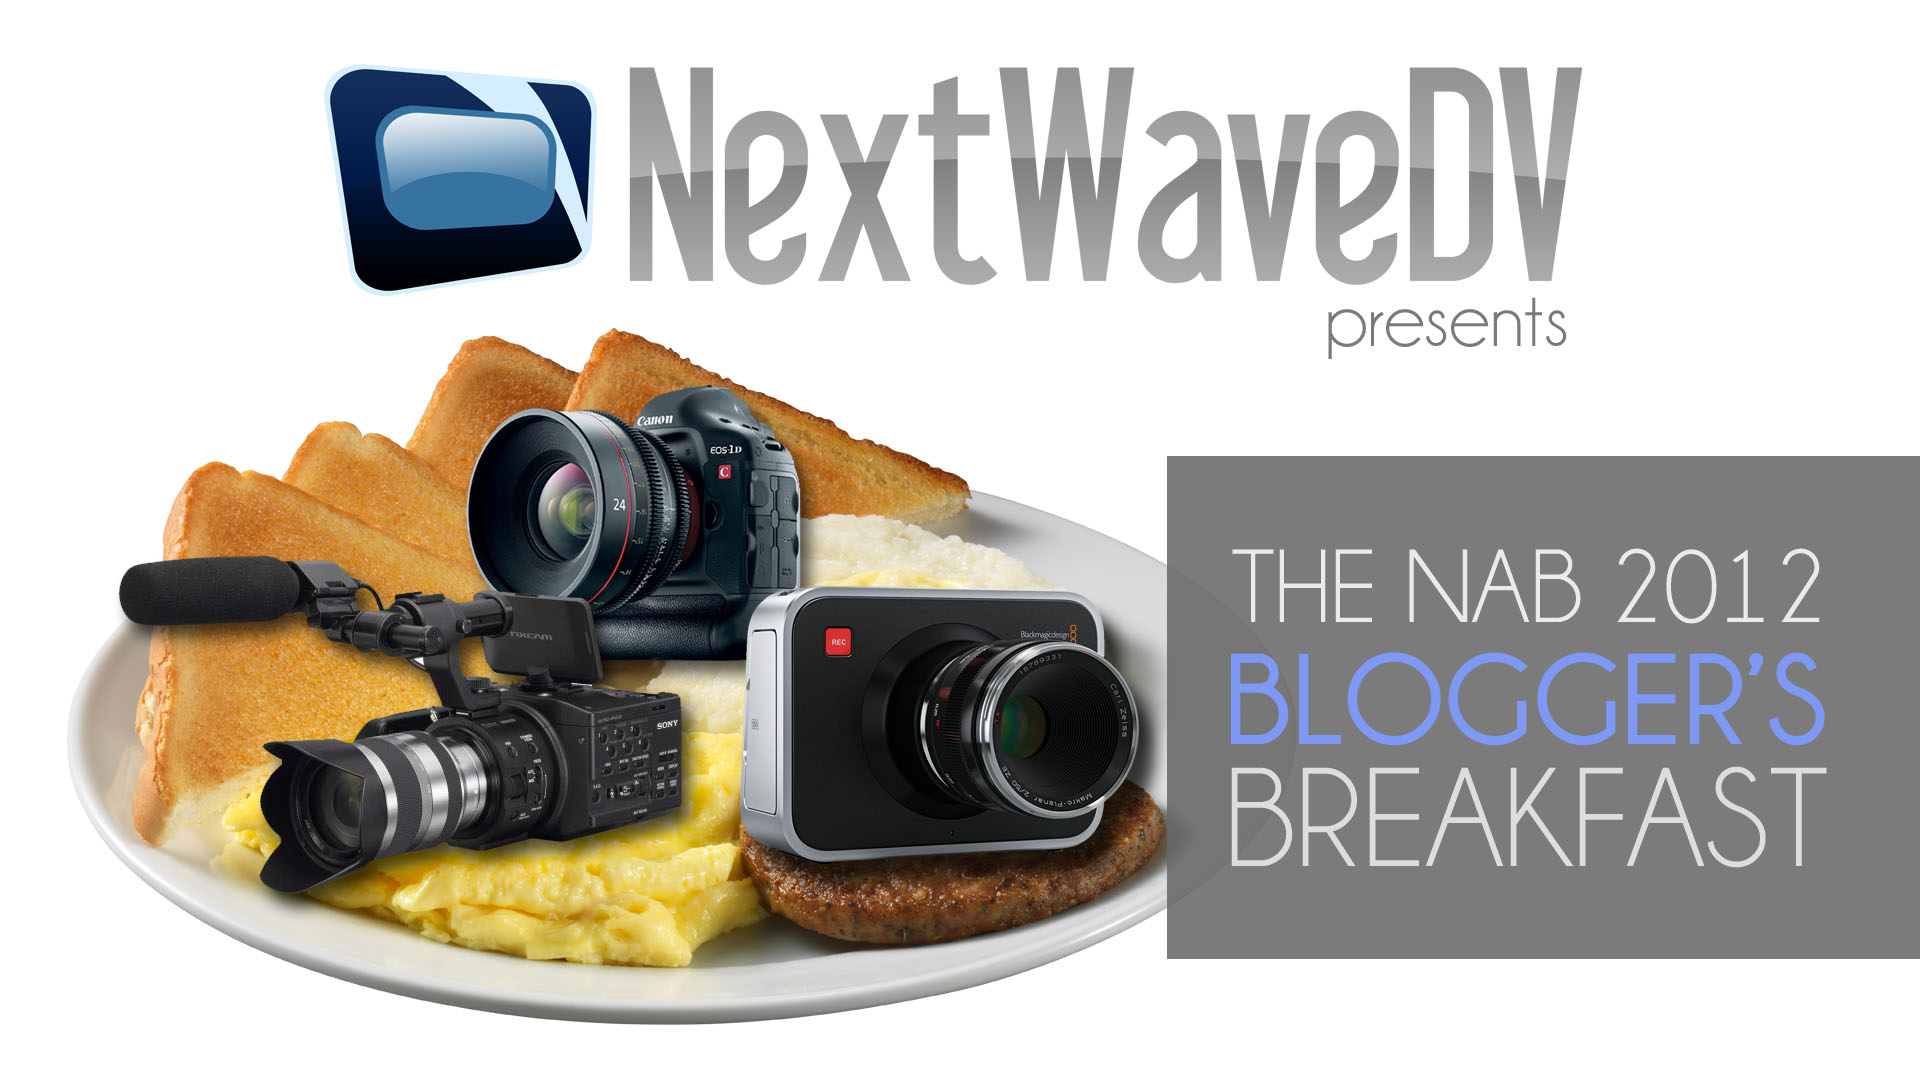 NAB 2012: Blogger’s Breakfast